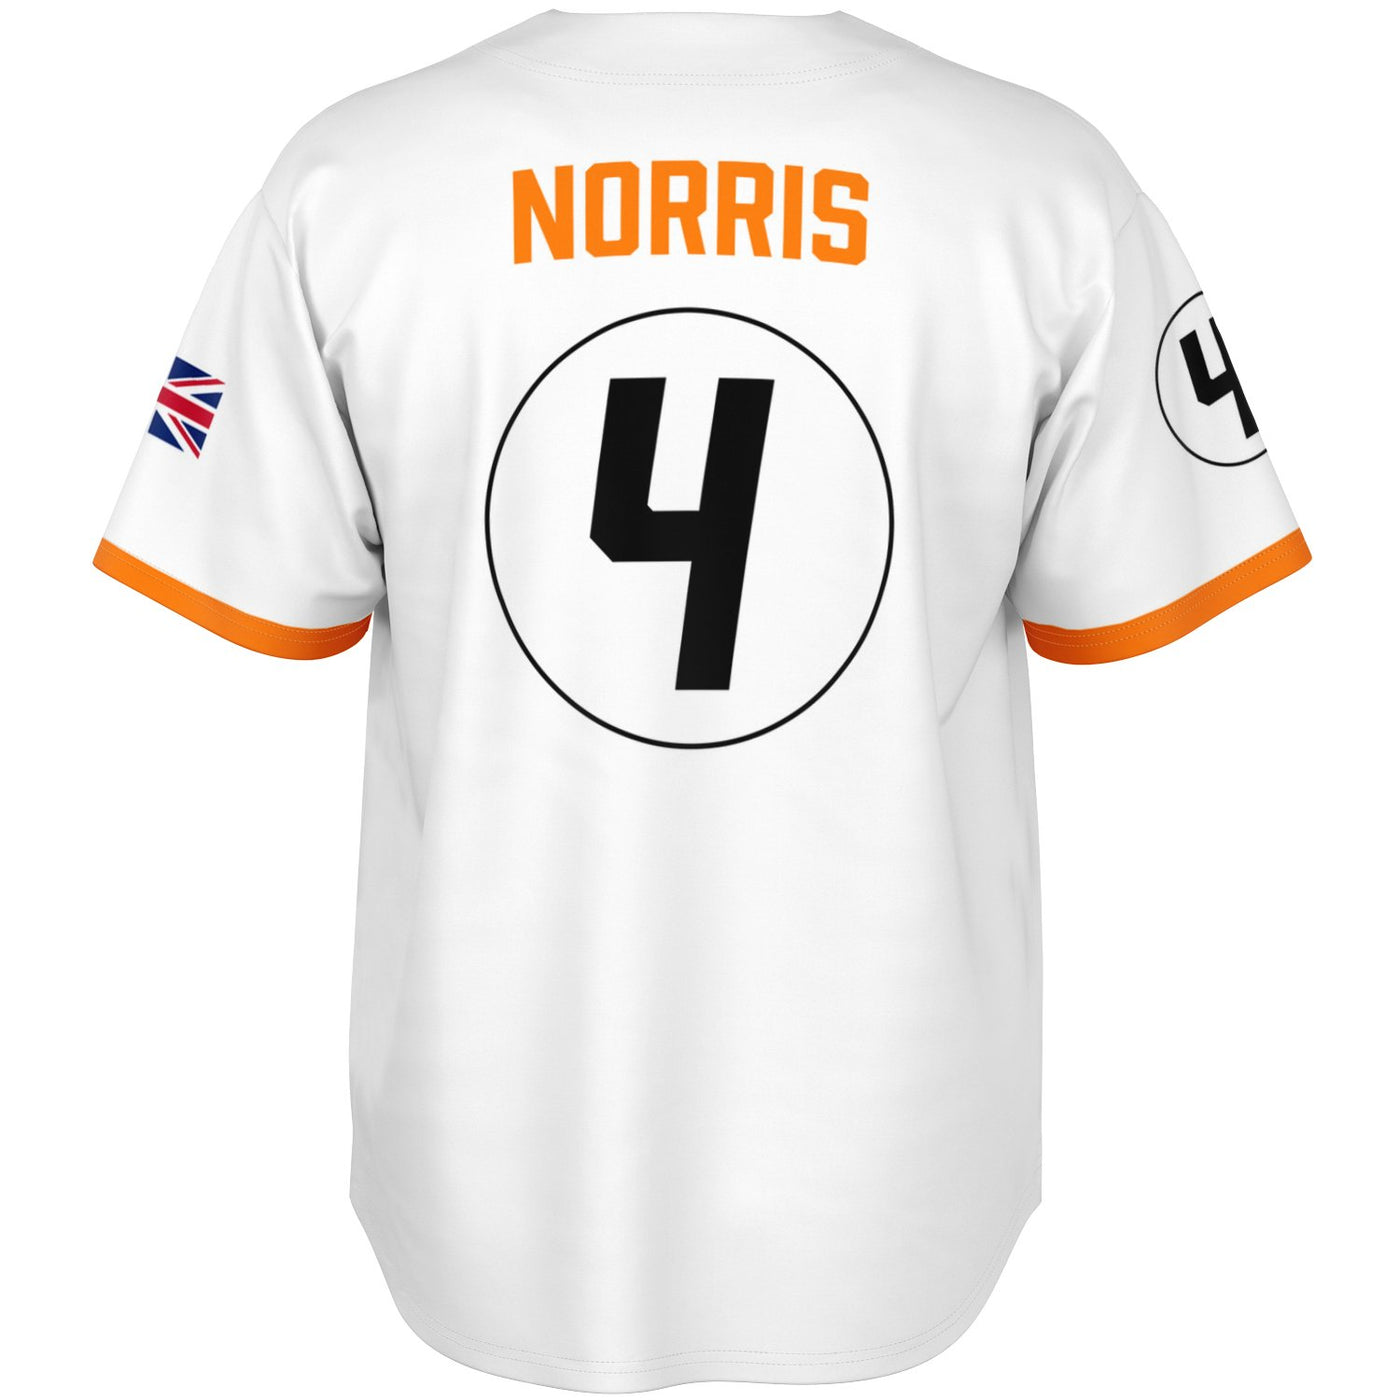 Norris - Home Jersey - Furious Motorsport